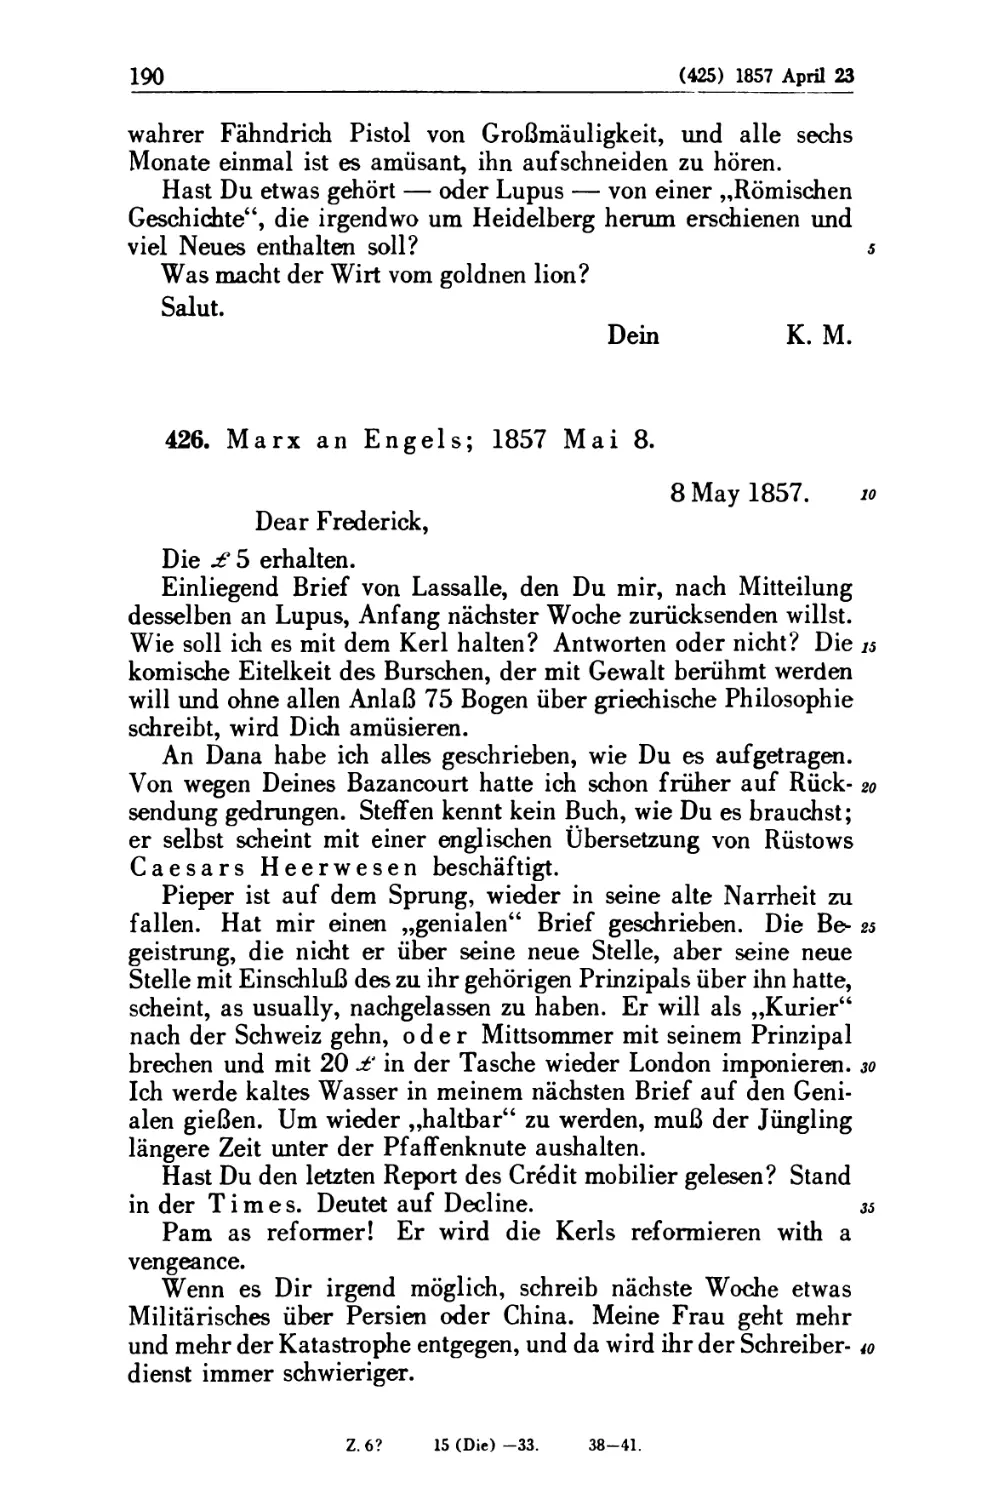 426. Marx an Engels; 1857 Mai 8